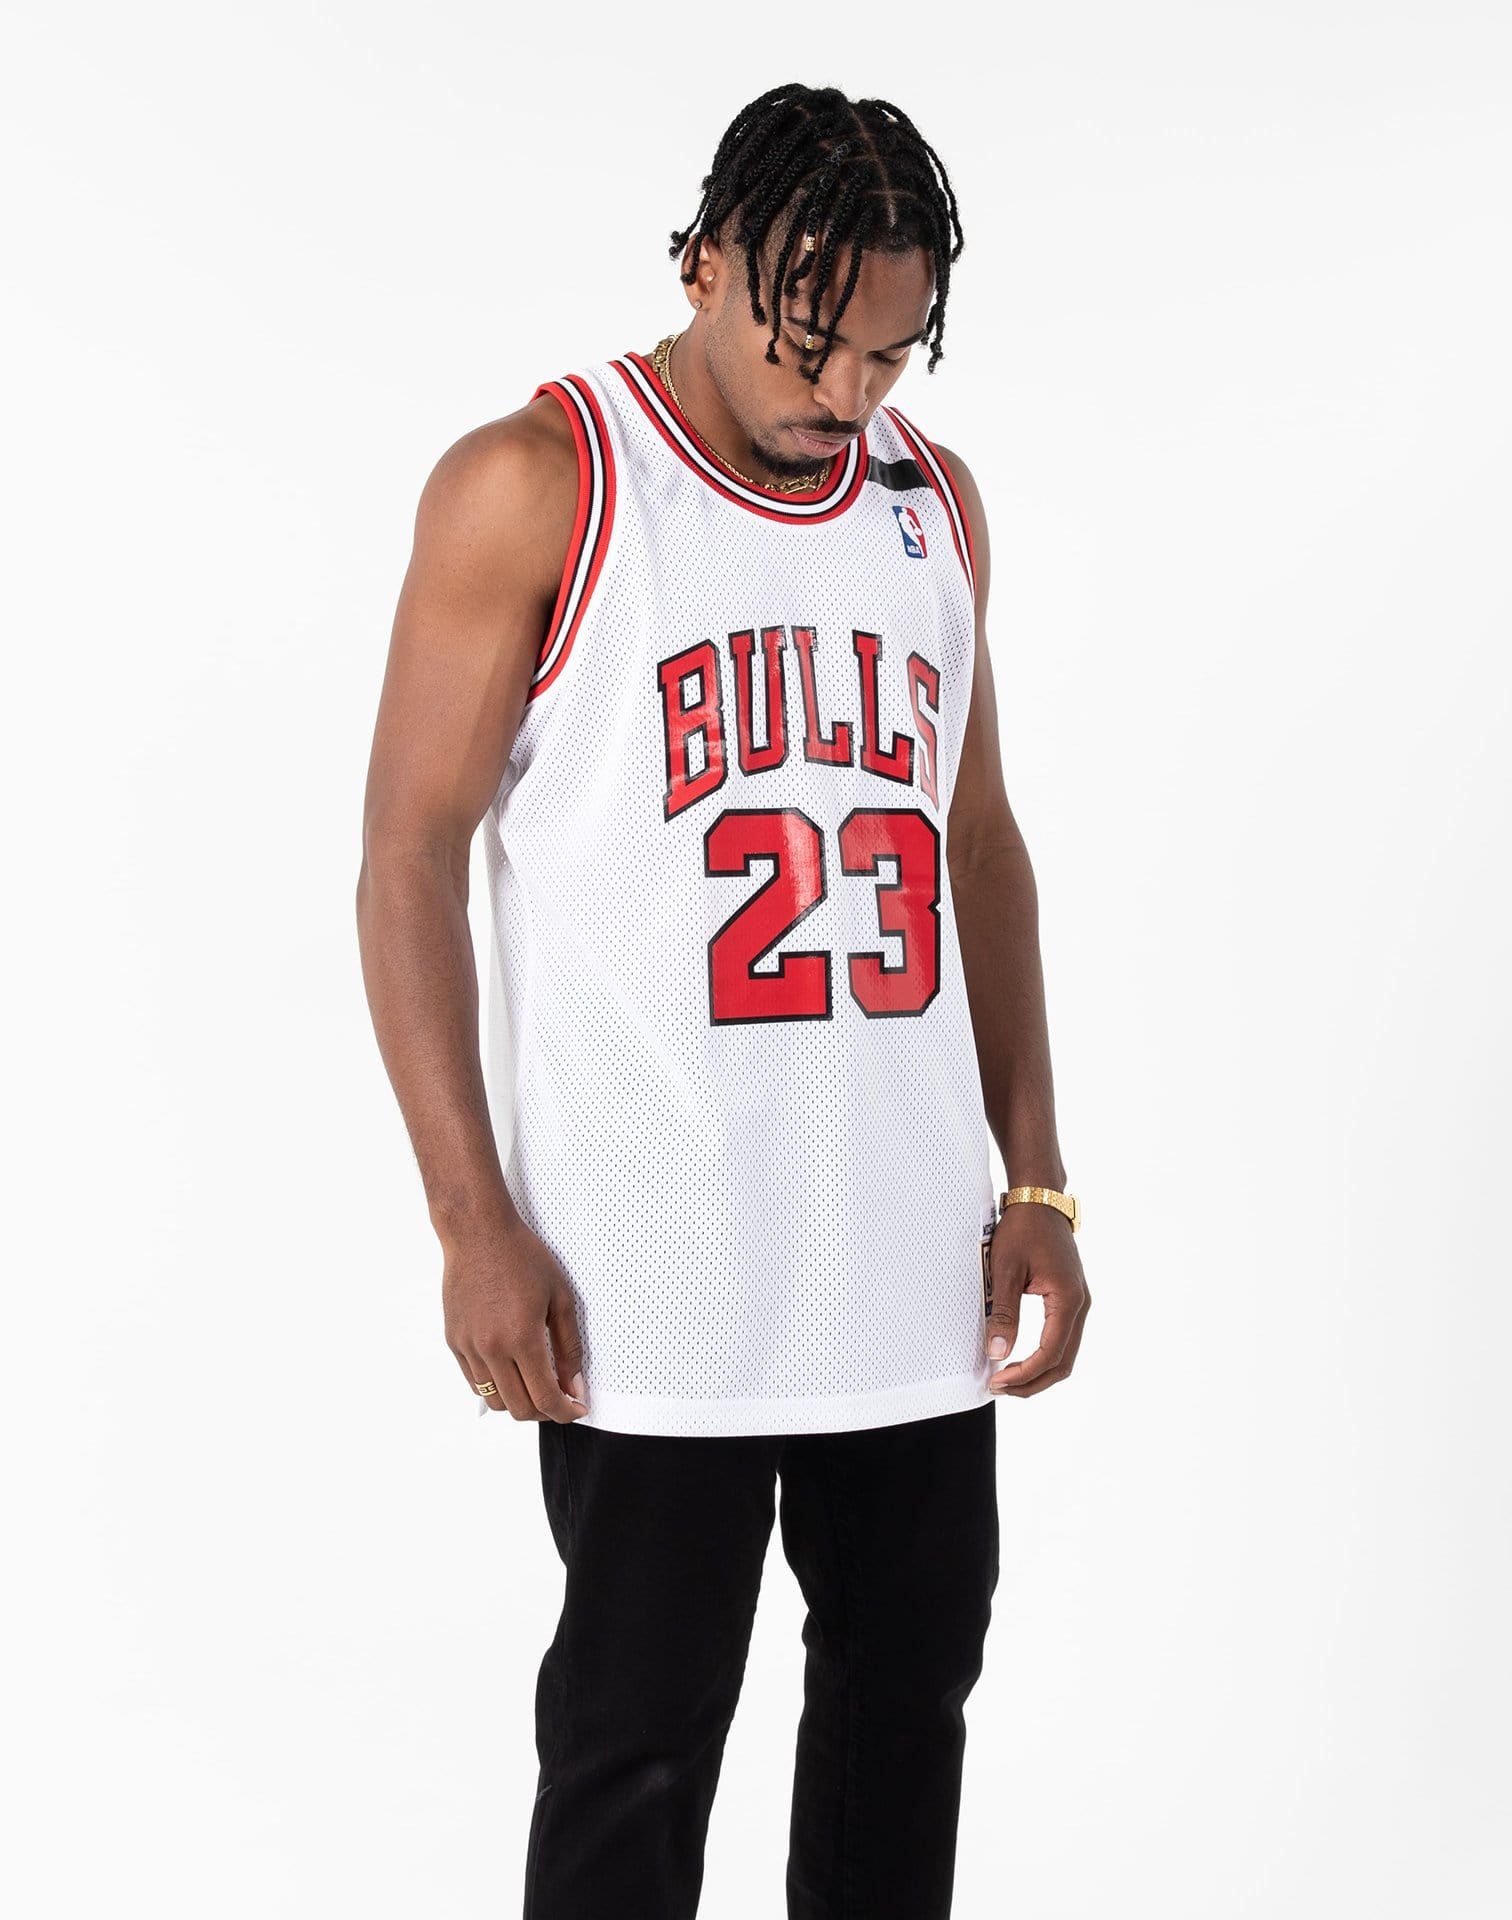 Nike Replica Jersey & Short Set Bulls